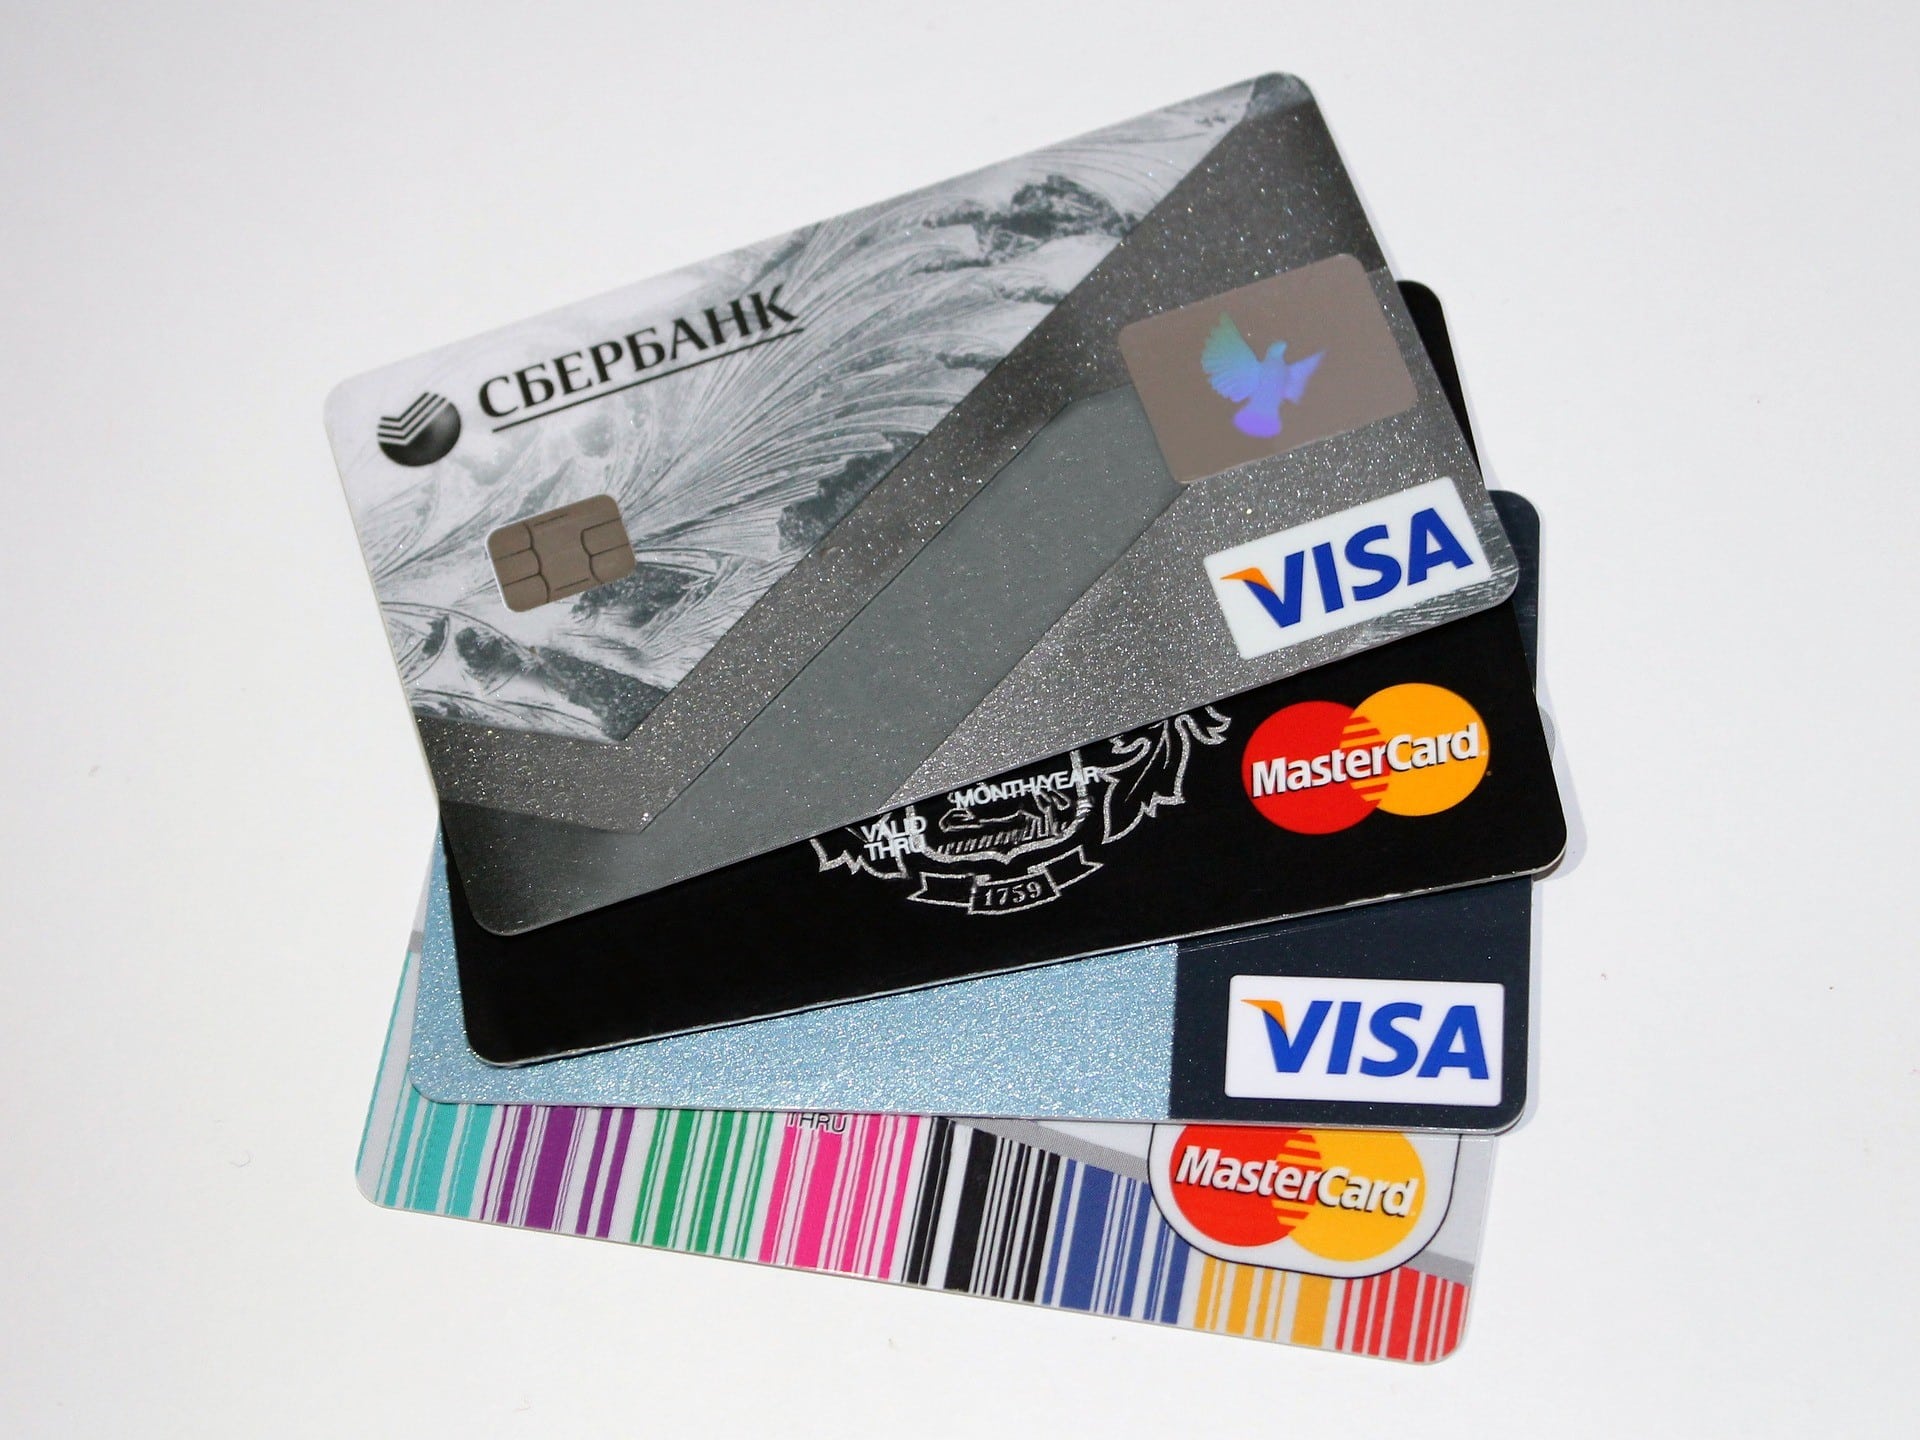 Crypto Debit Card Targets Generation Z